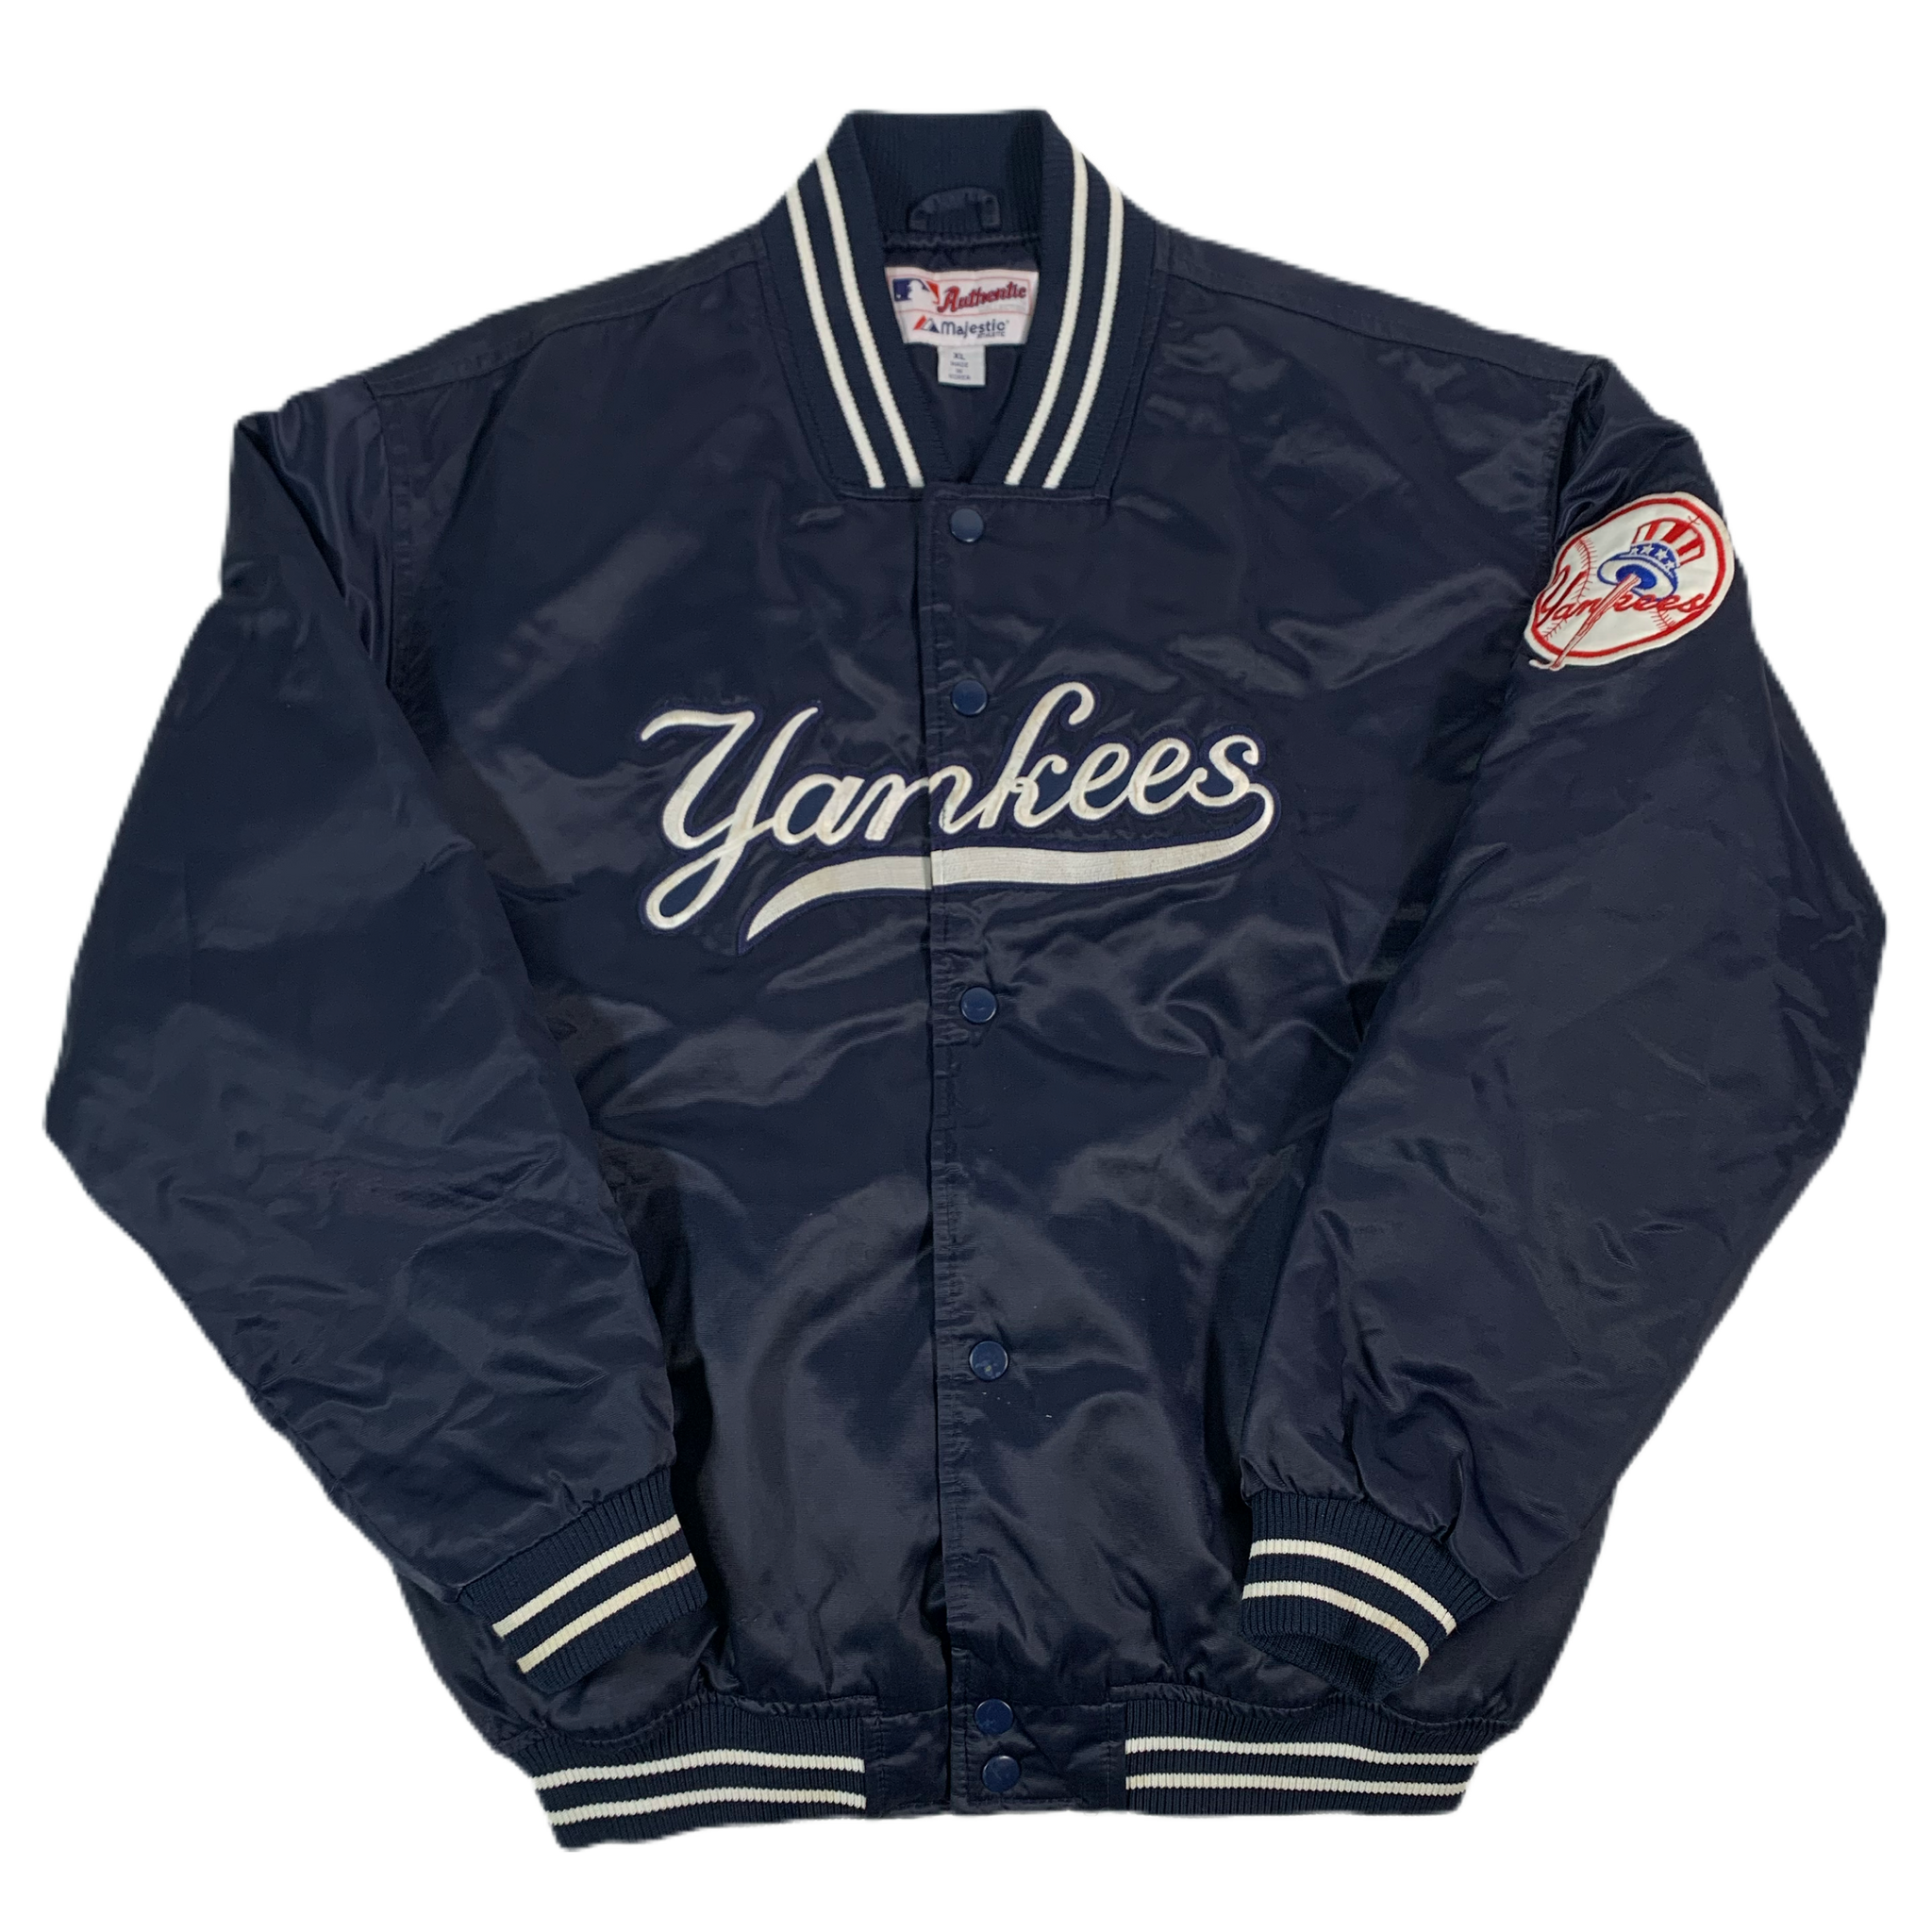 Vintage New York Yankees “Majestic” Jacket